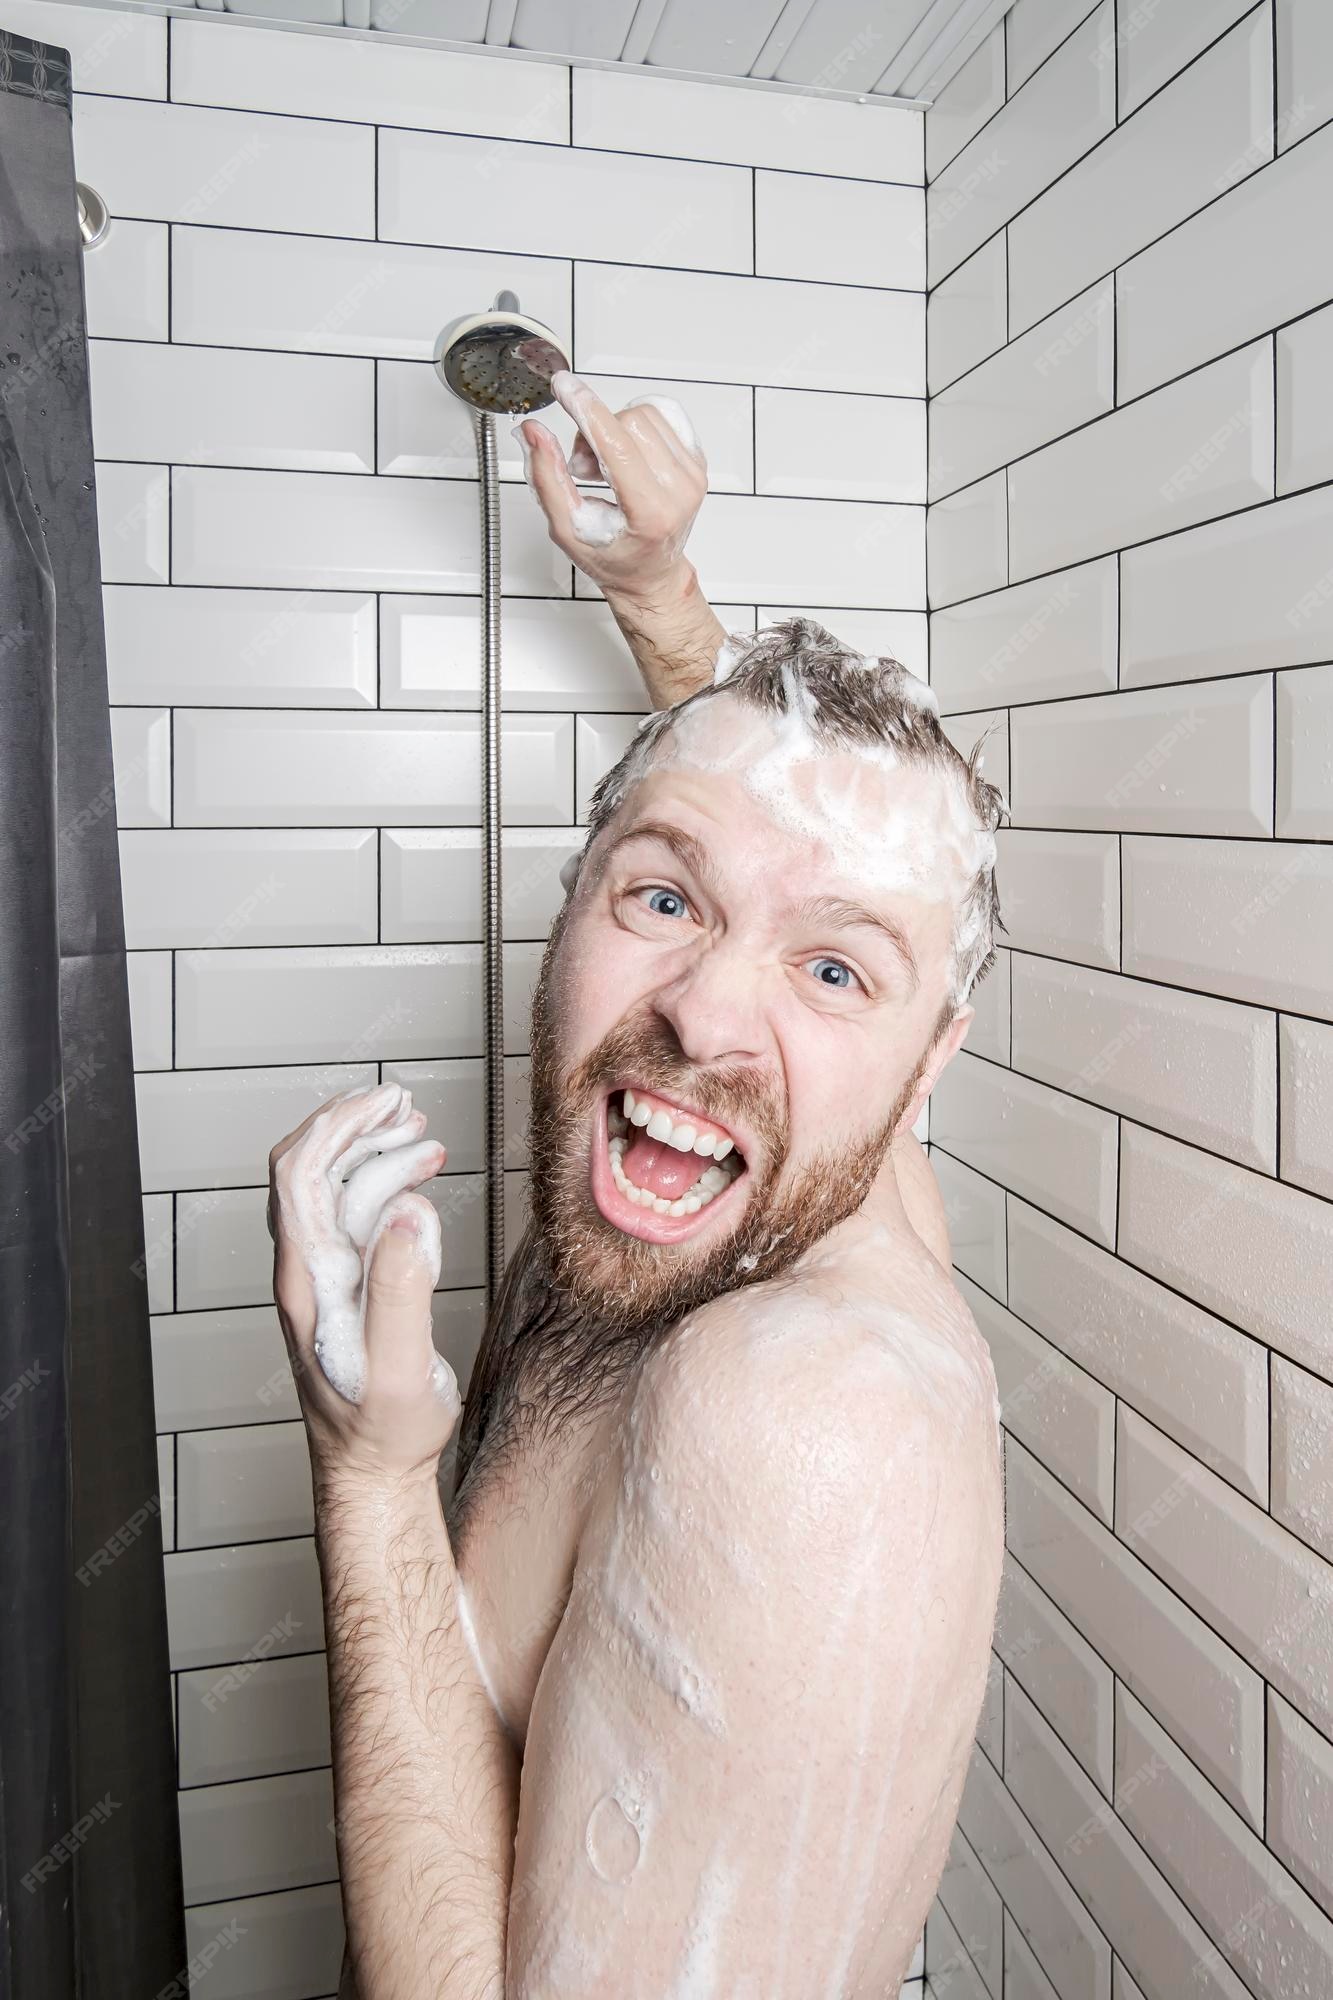 annie delacruz recommends having fun in the shower pic